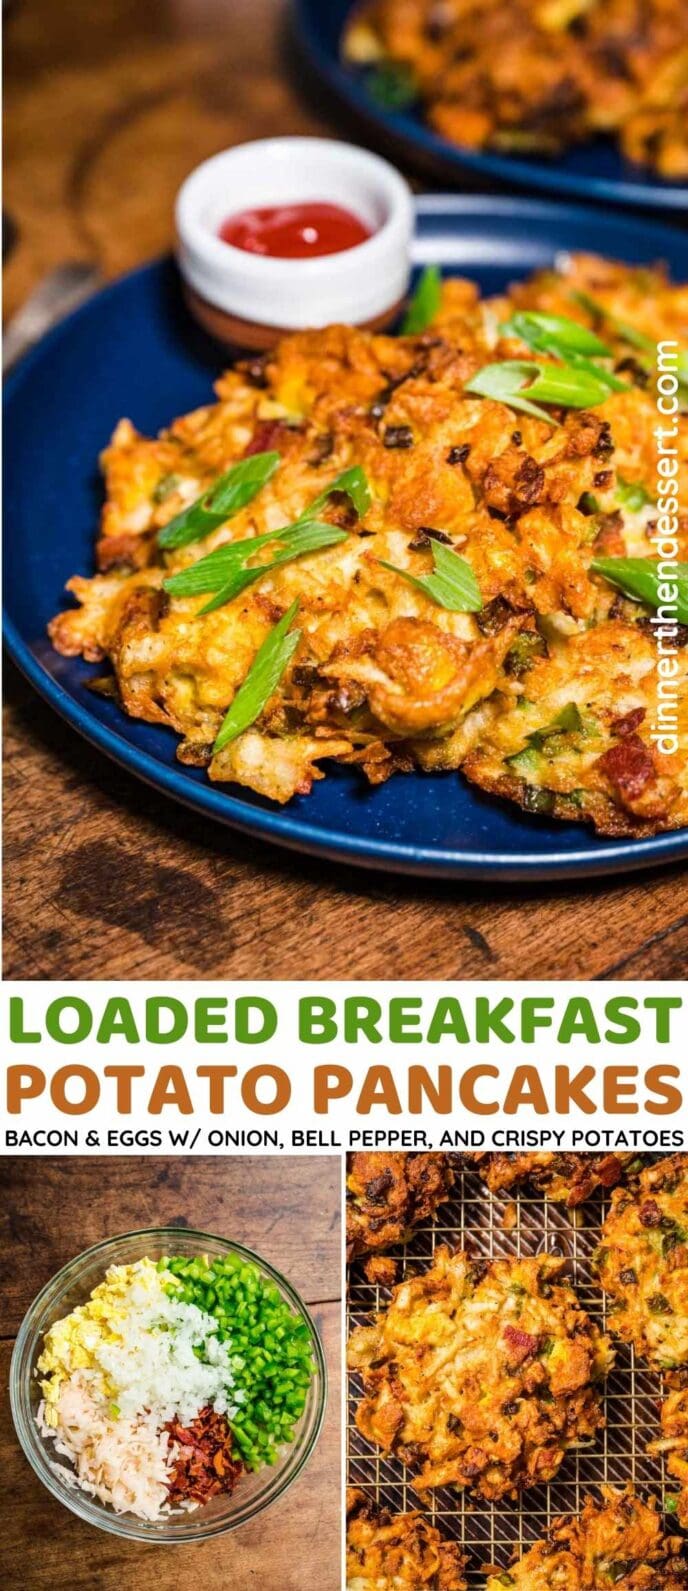 Loaded Breakfast Potato Pancakes Collage